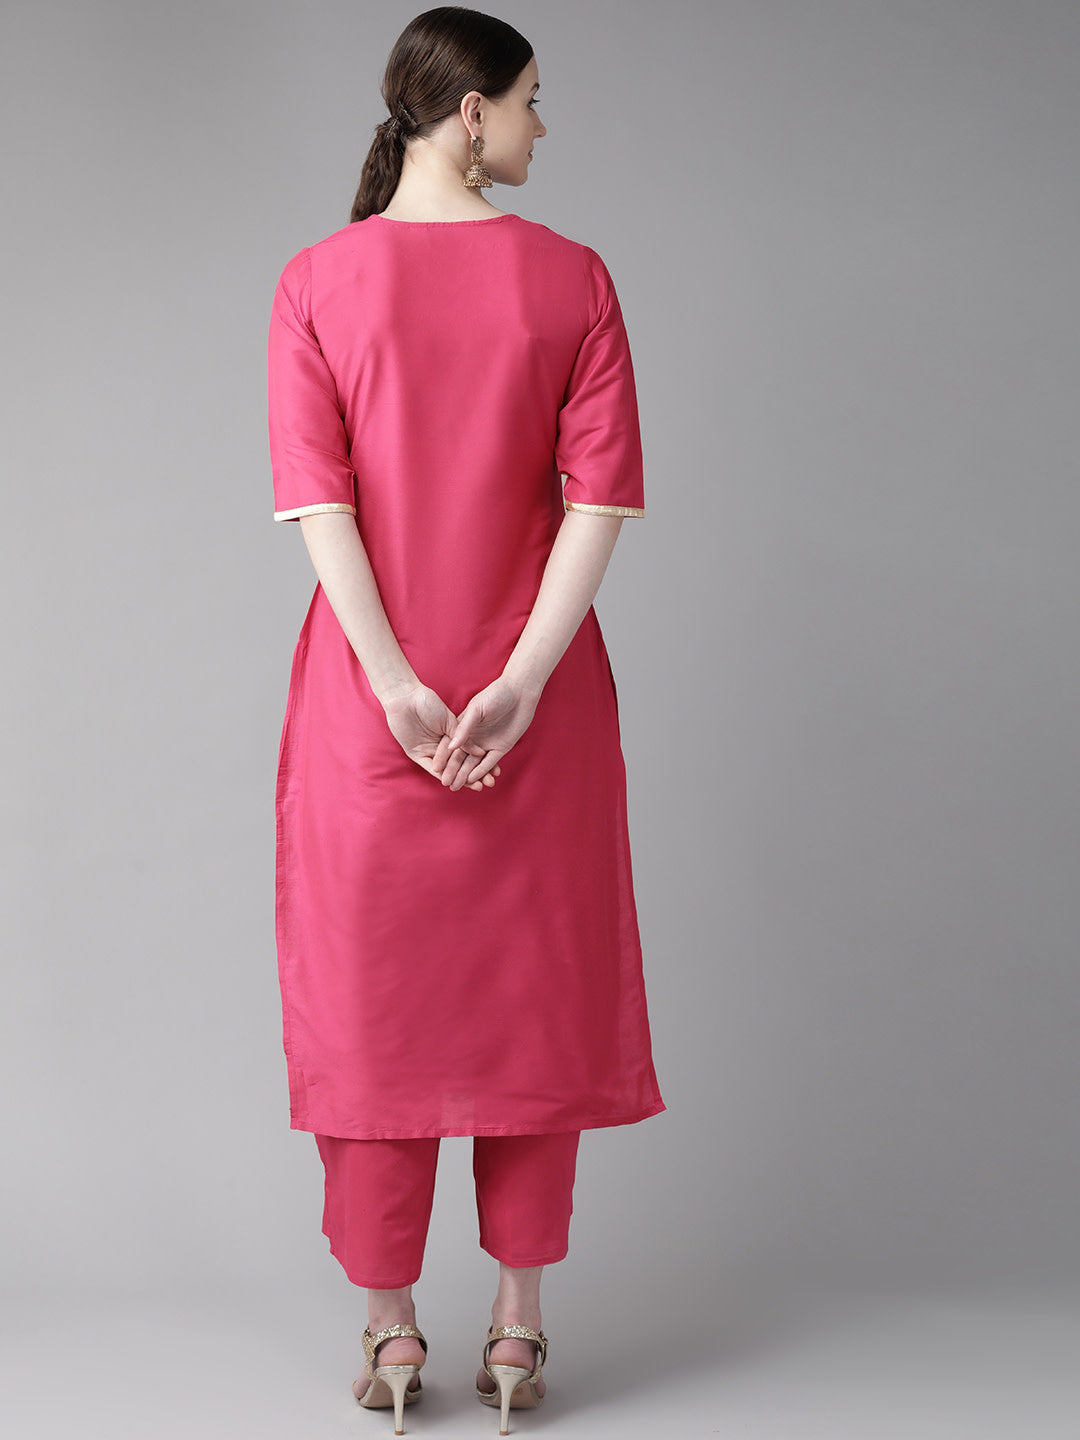 Women's Pink And Golden Block Print Kurta With Palazzos - Bhama Couture